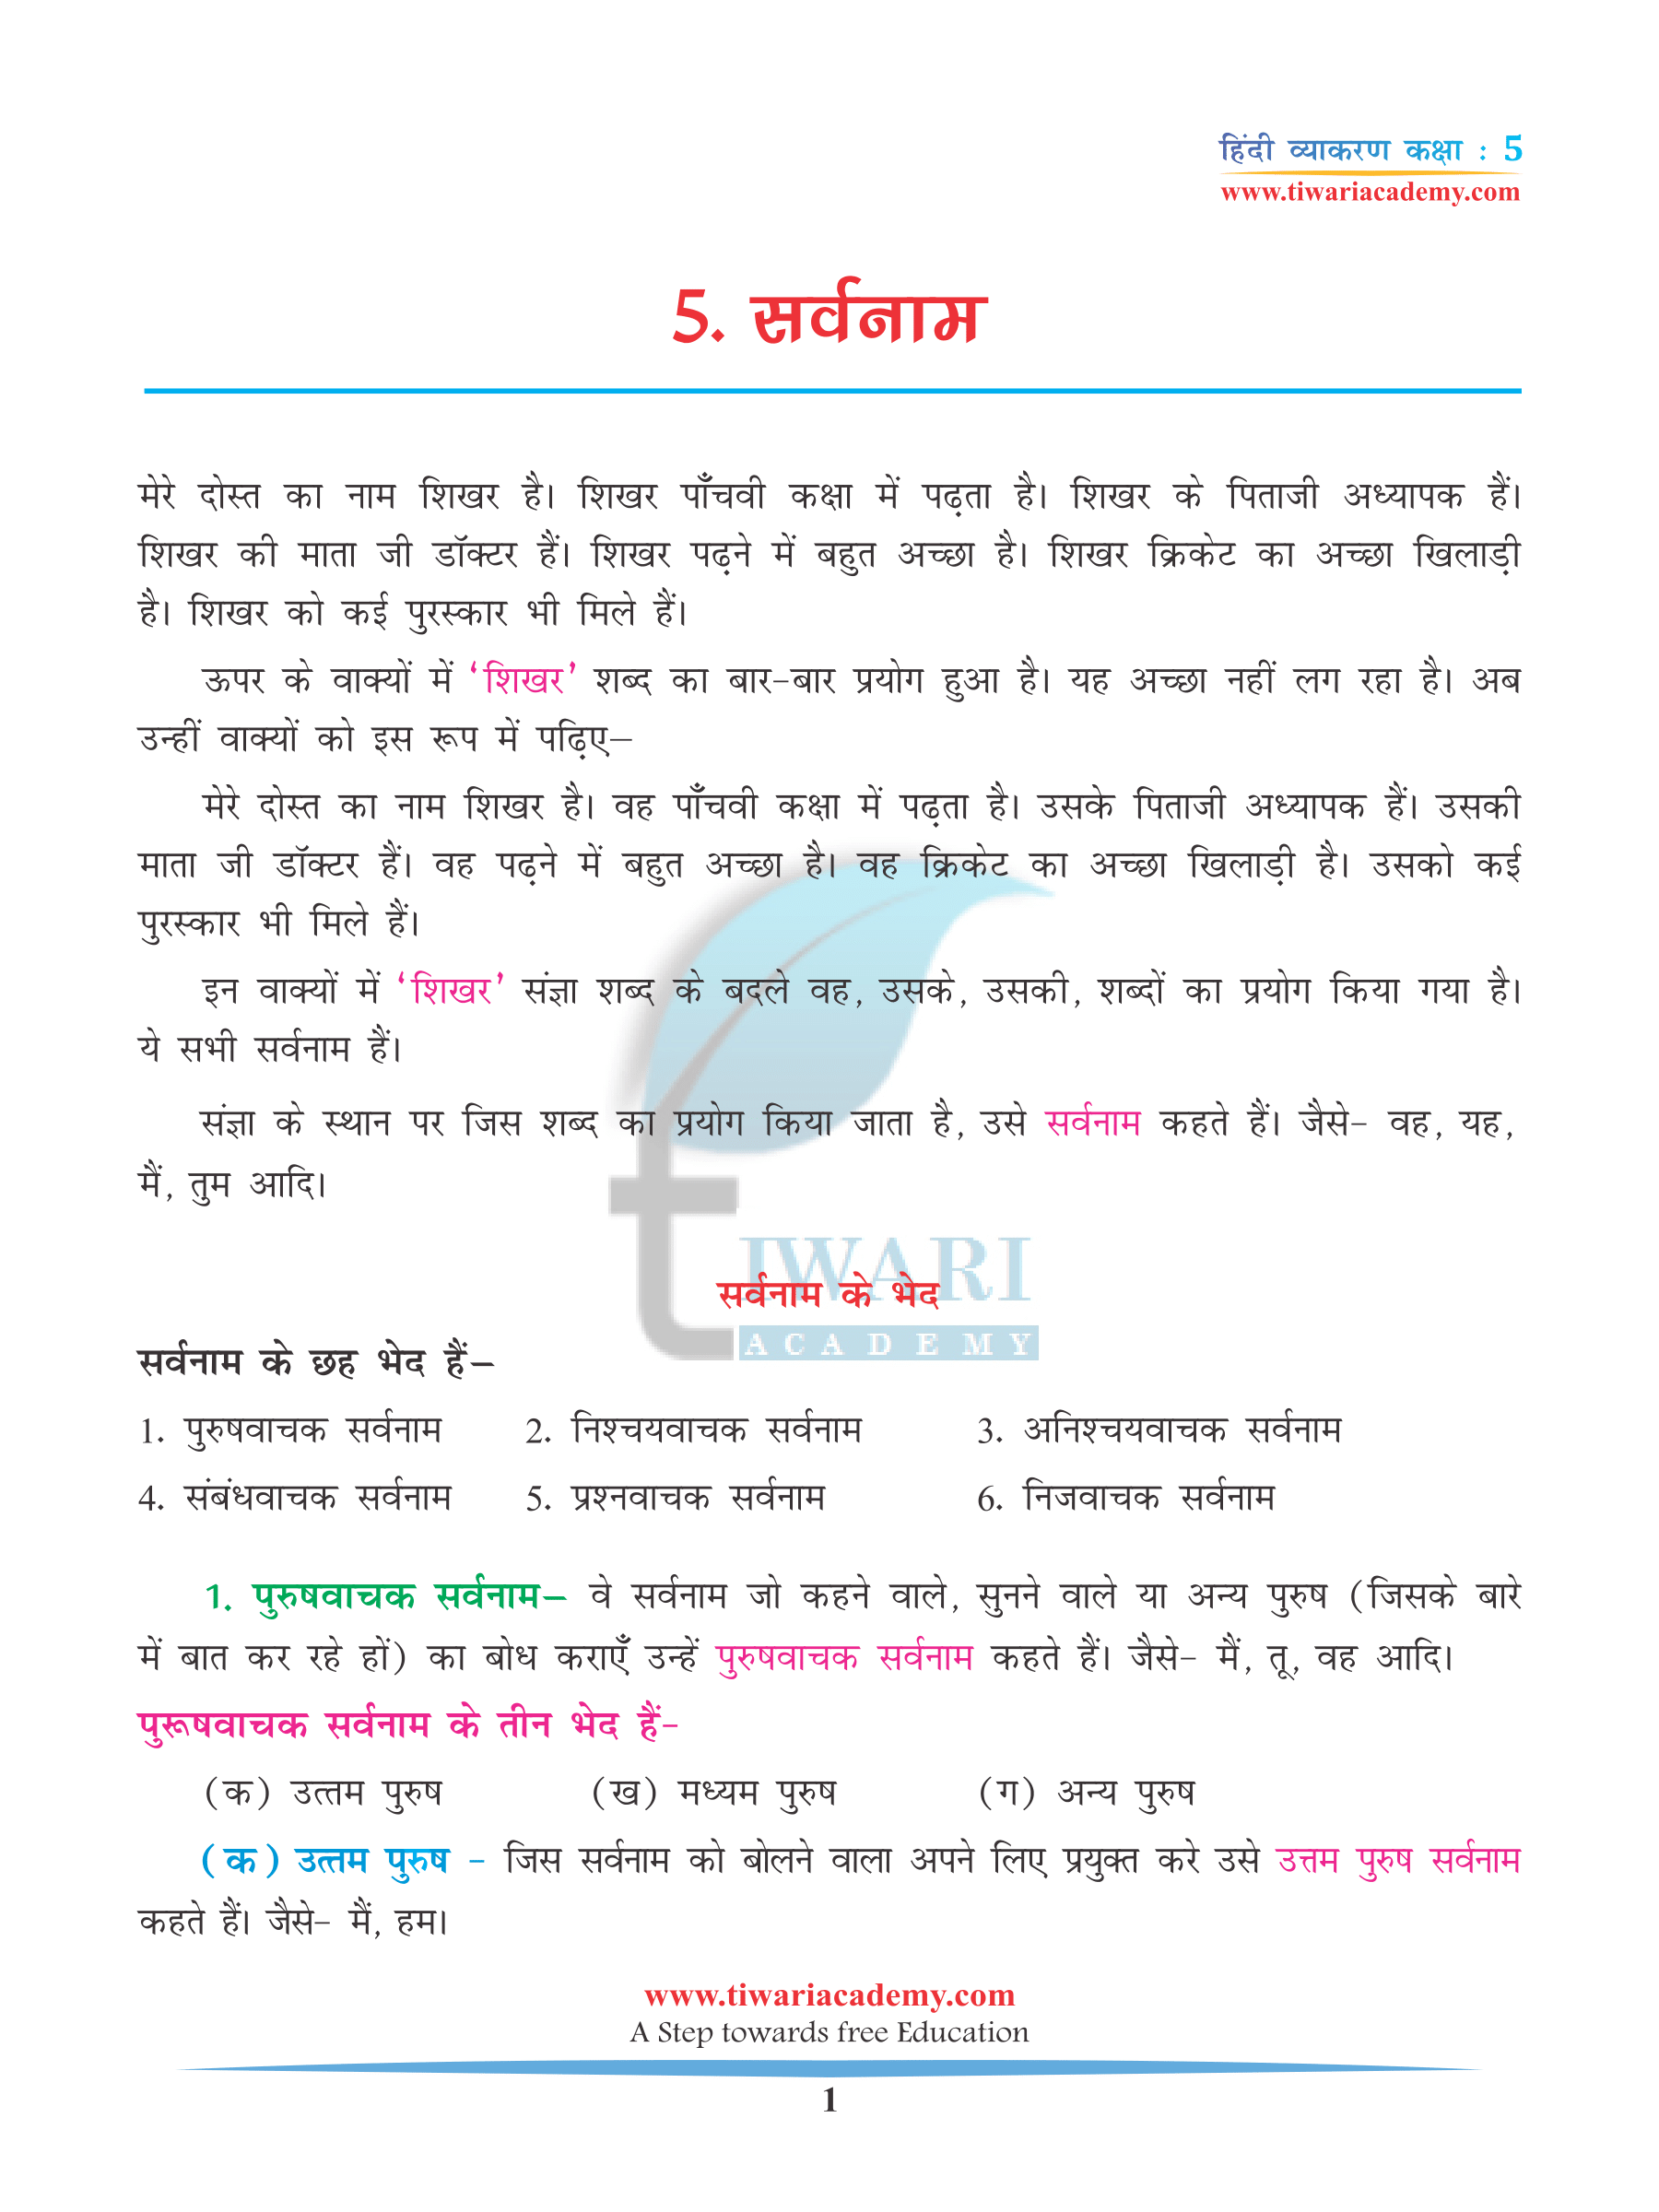 NCERT Solutions for Class 5 Hindi Grammar Chapter 5 Sarvna